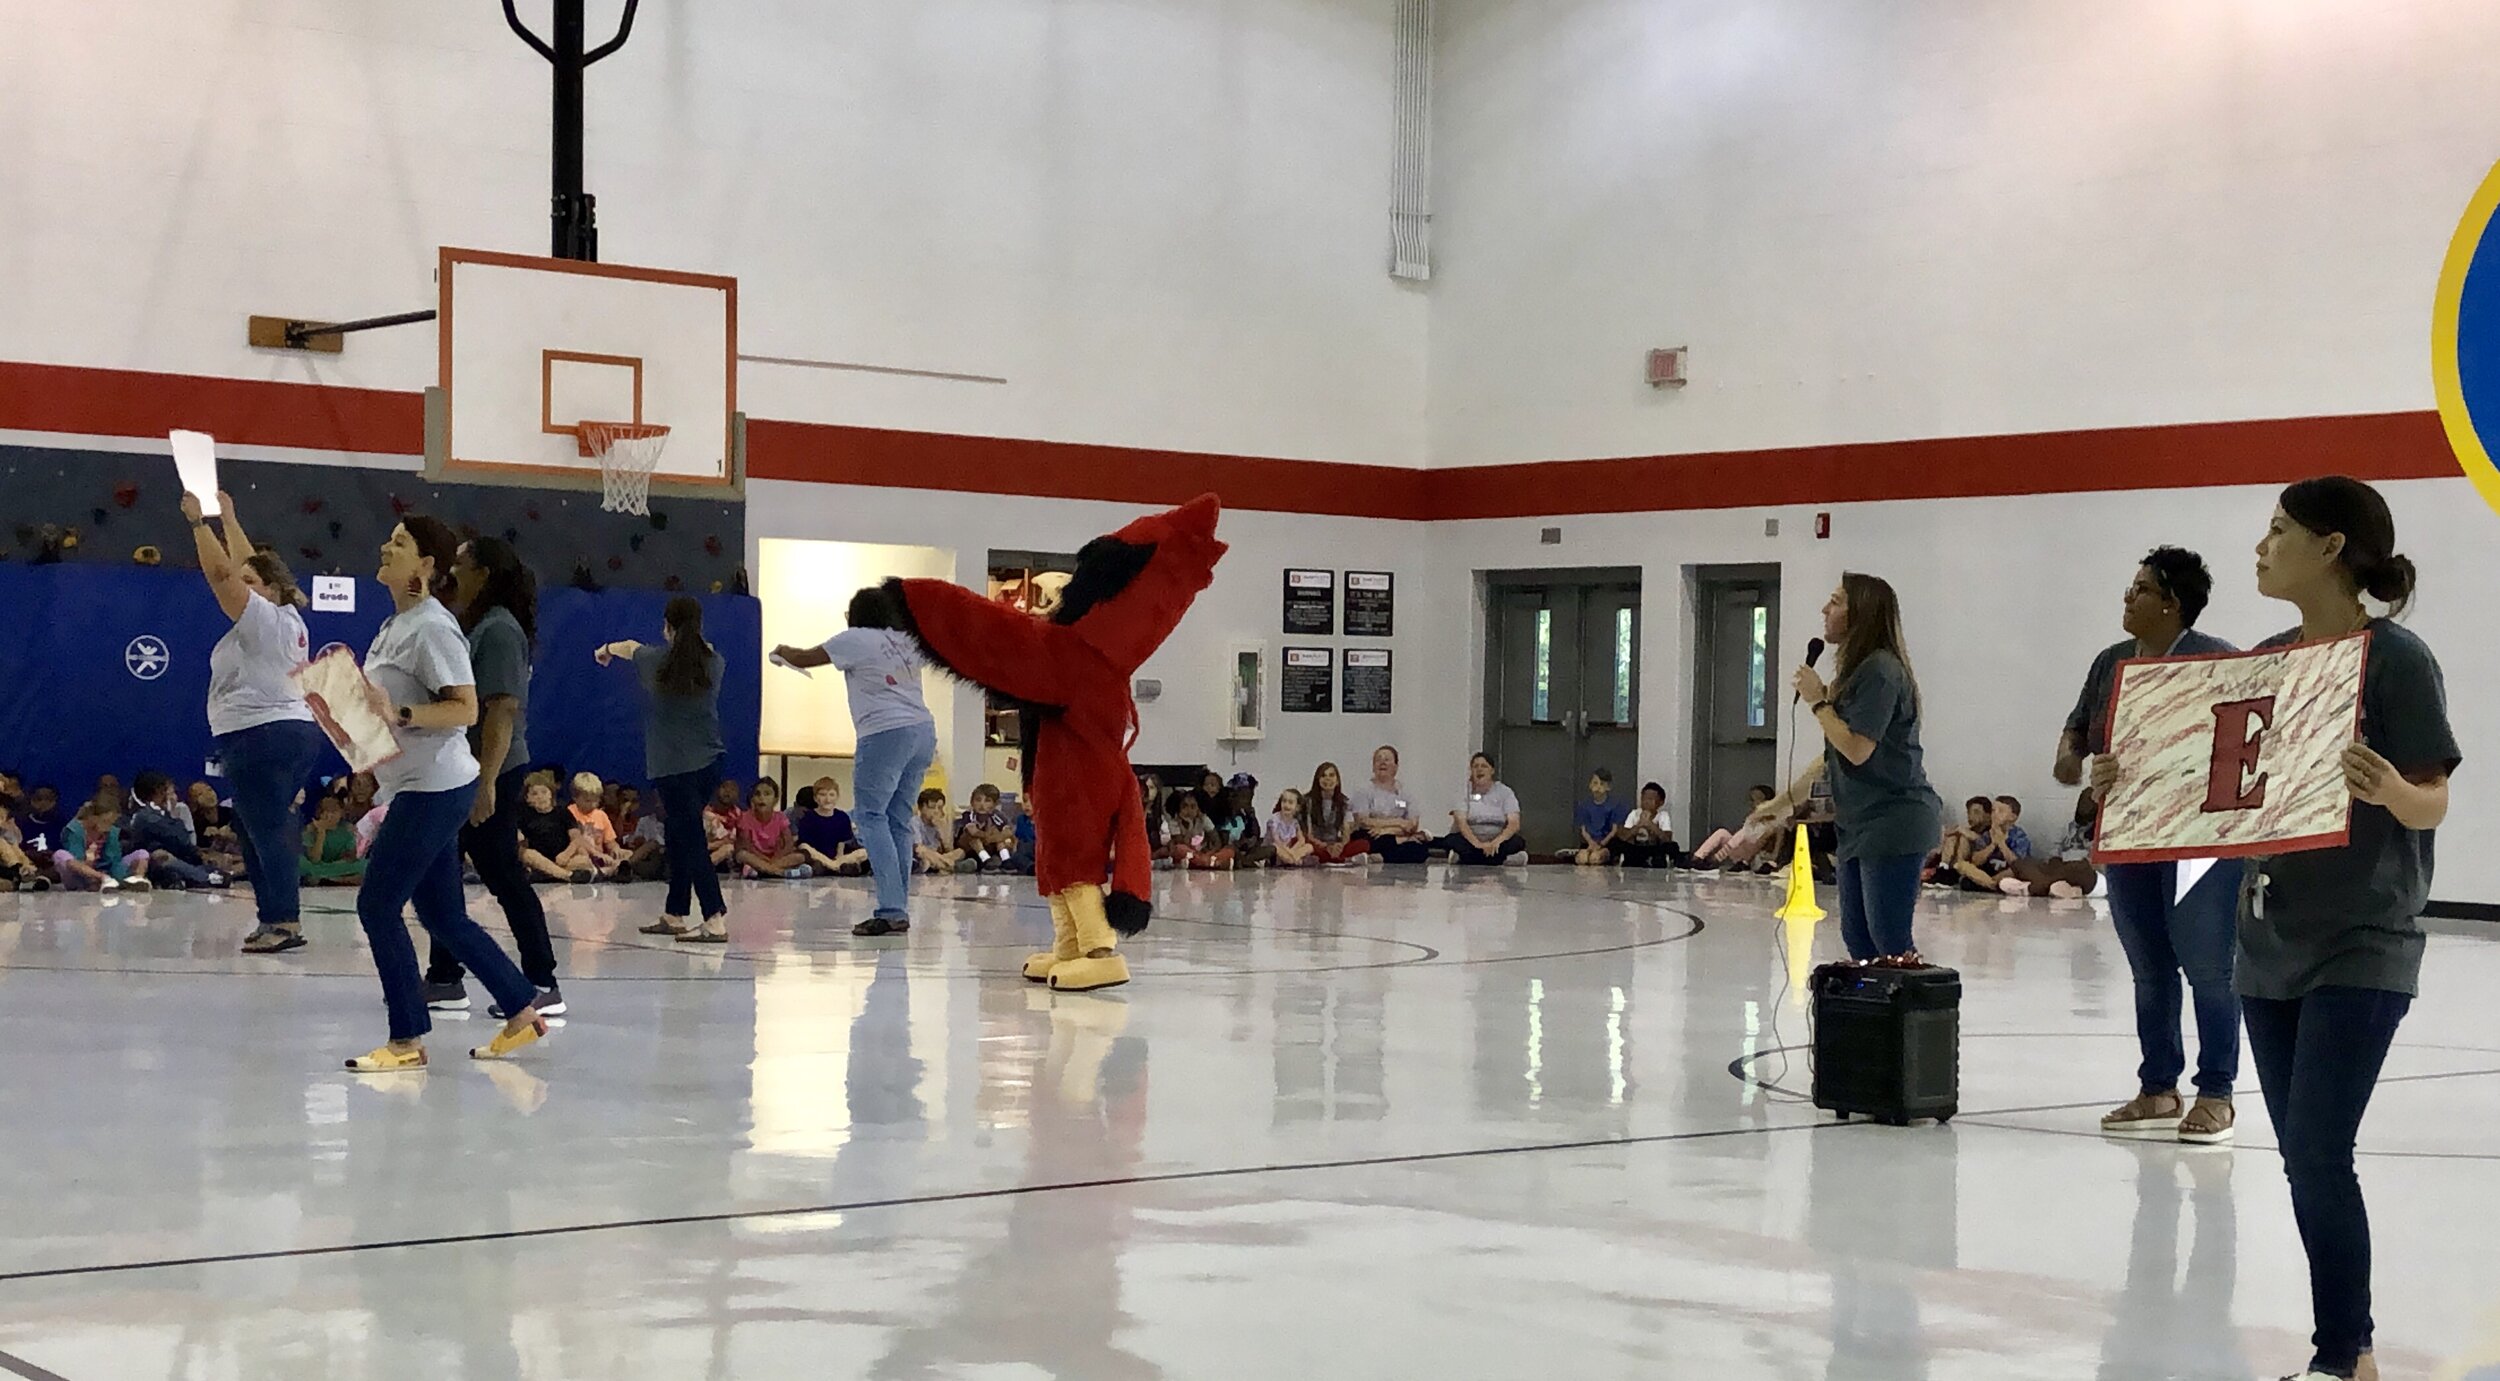 Redbird mascot and staff present expectations